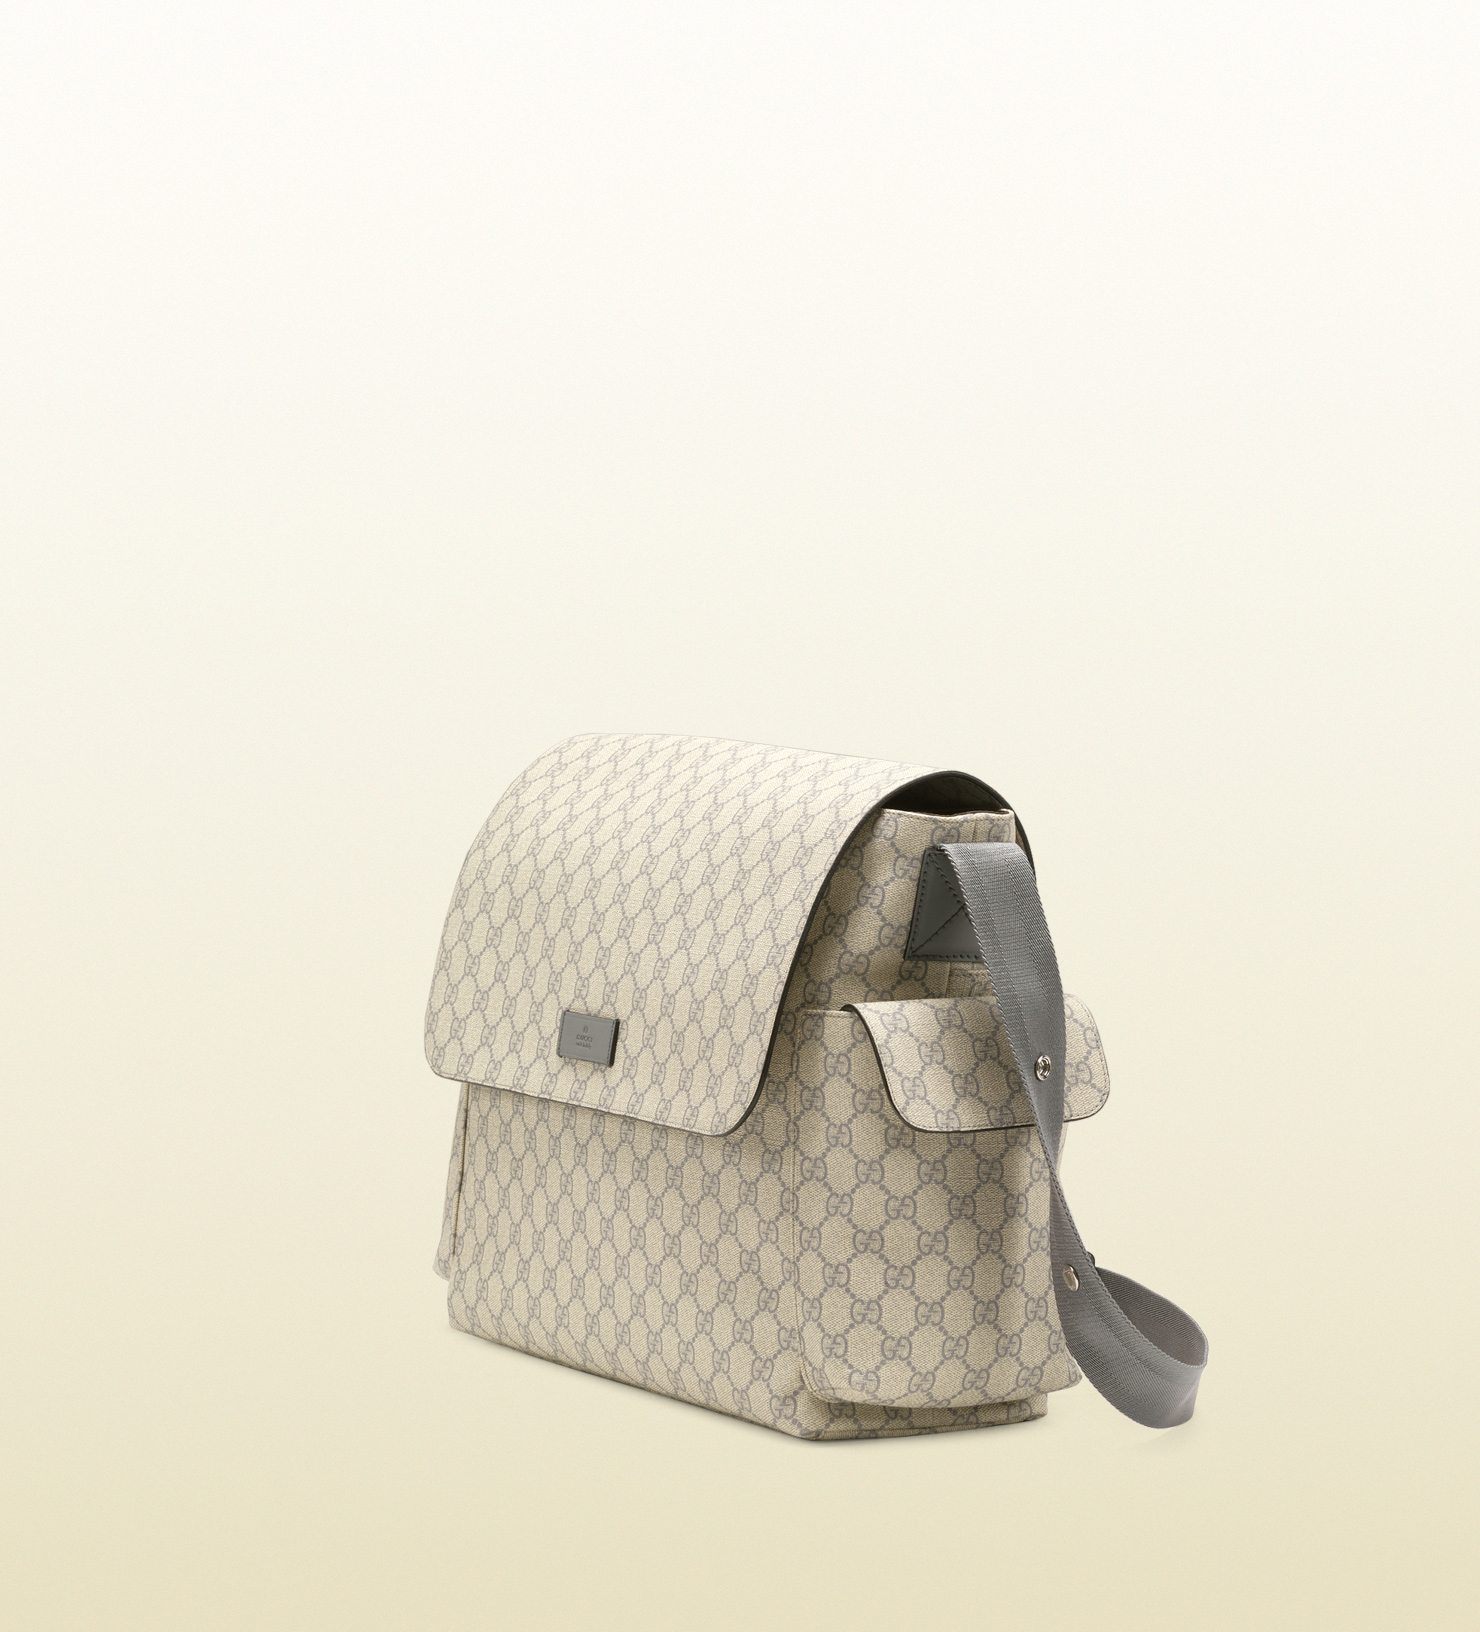 Gucci Gg Supreme Canvas Diaper Bag in Grey (Gray) for Men - Lyst